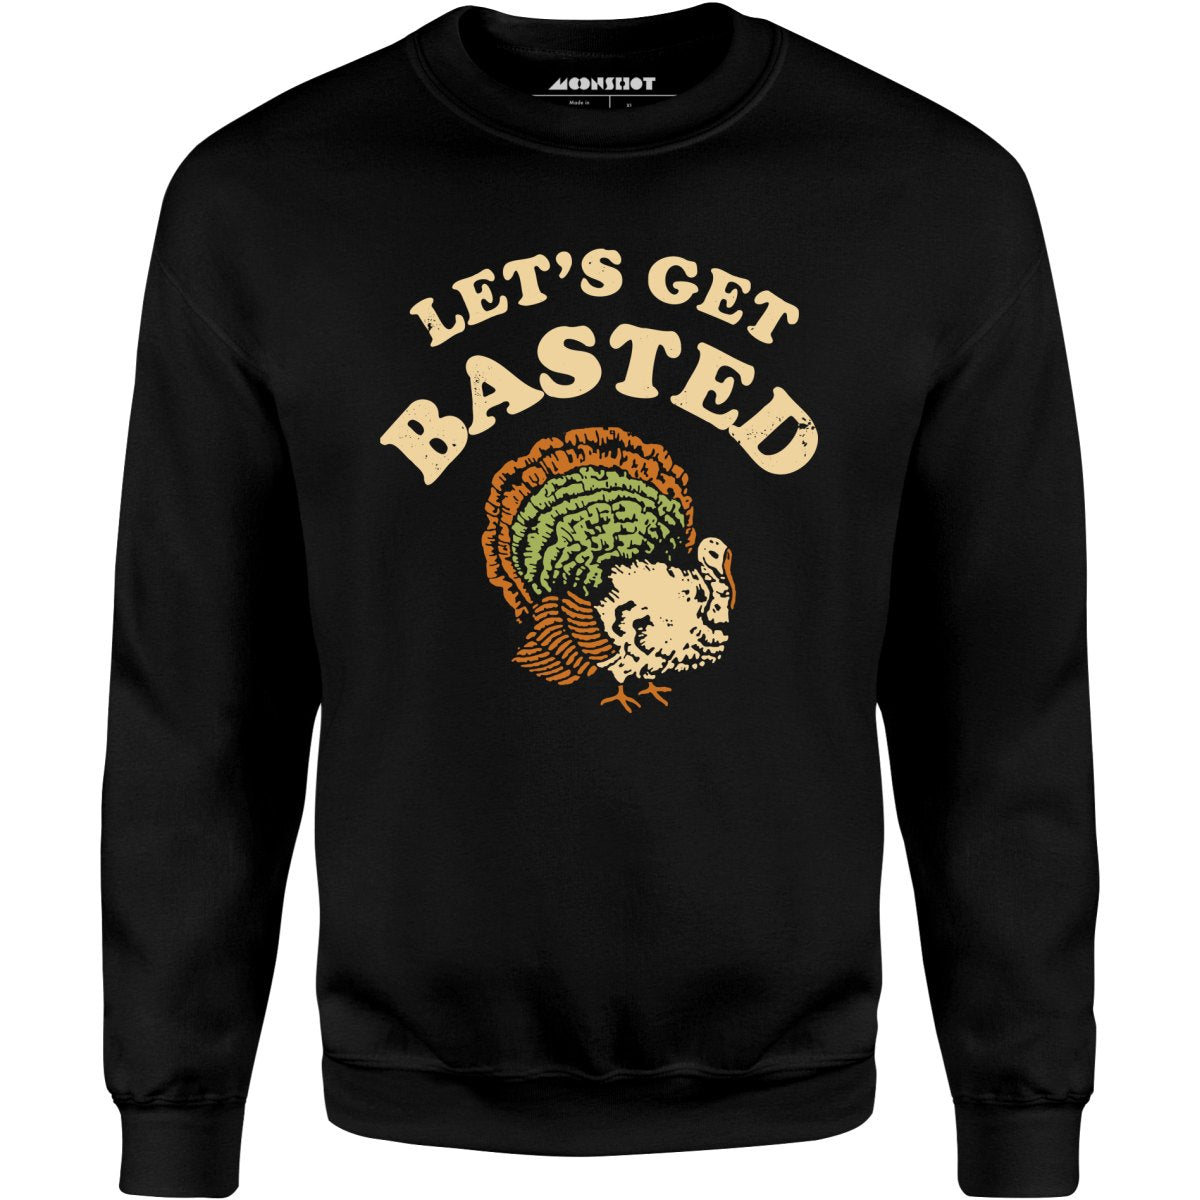 Let's Get Basted - Unisex Sweatshirt